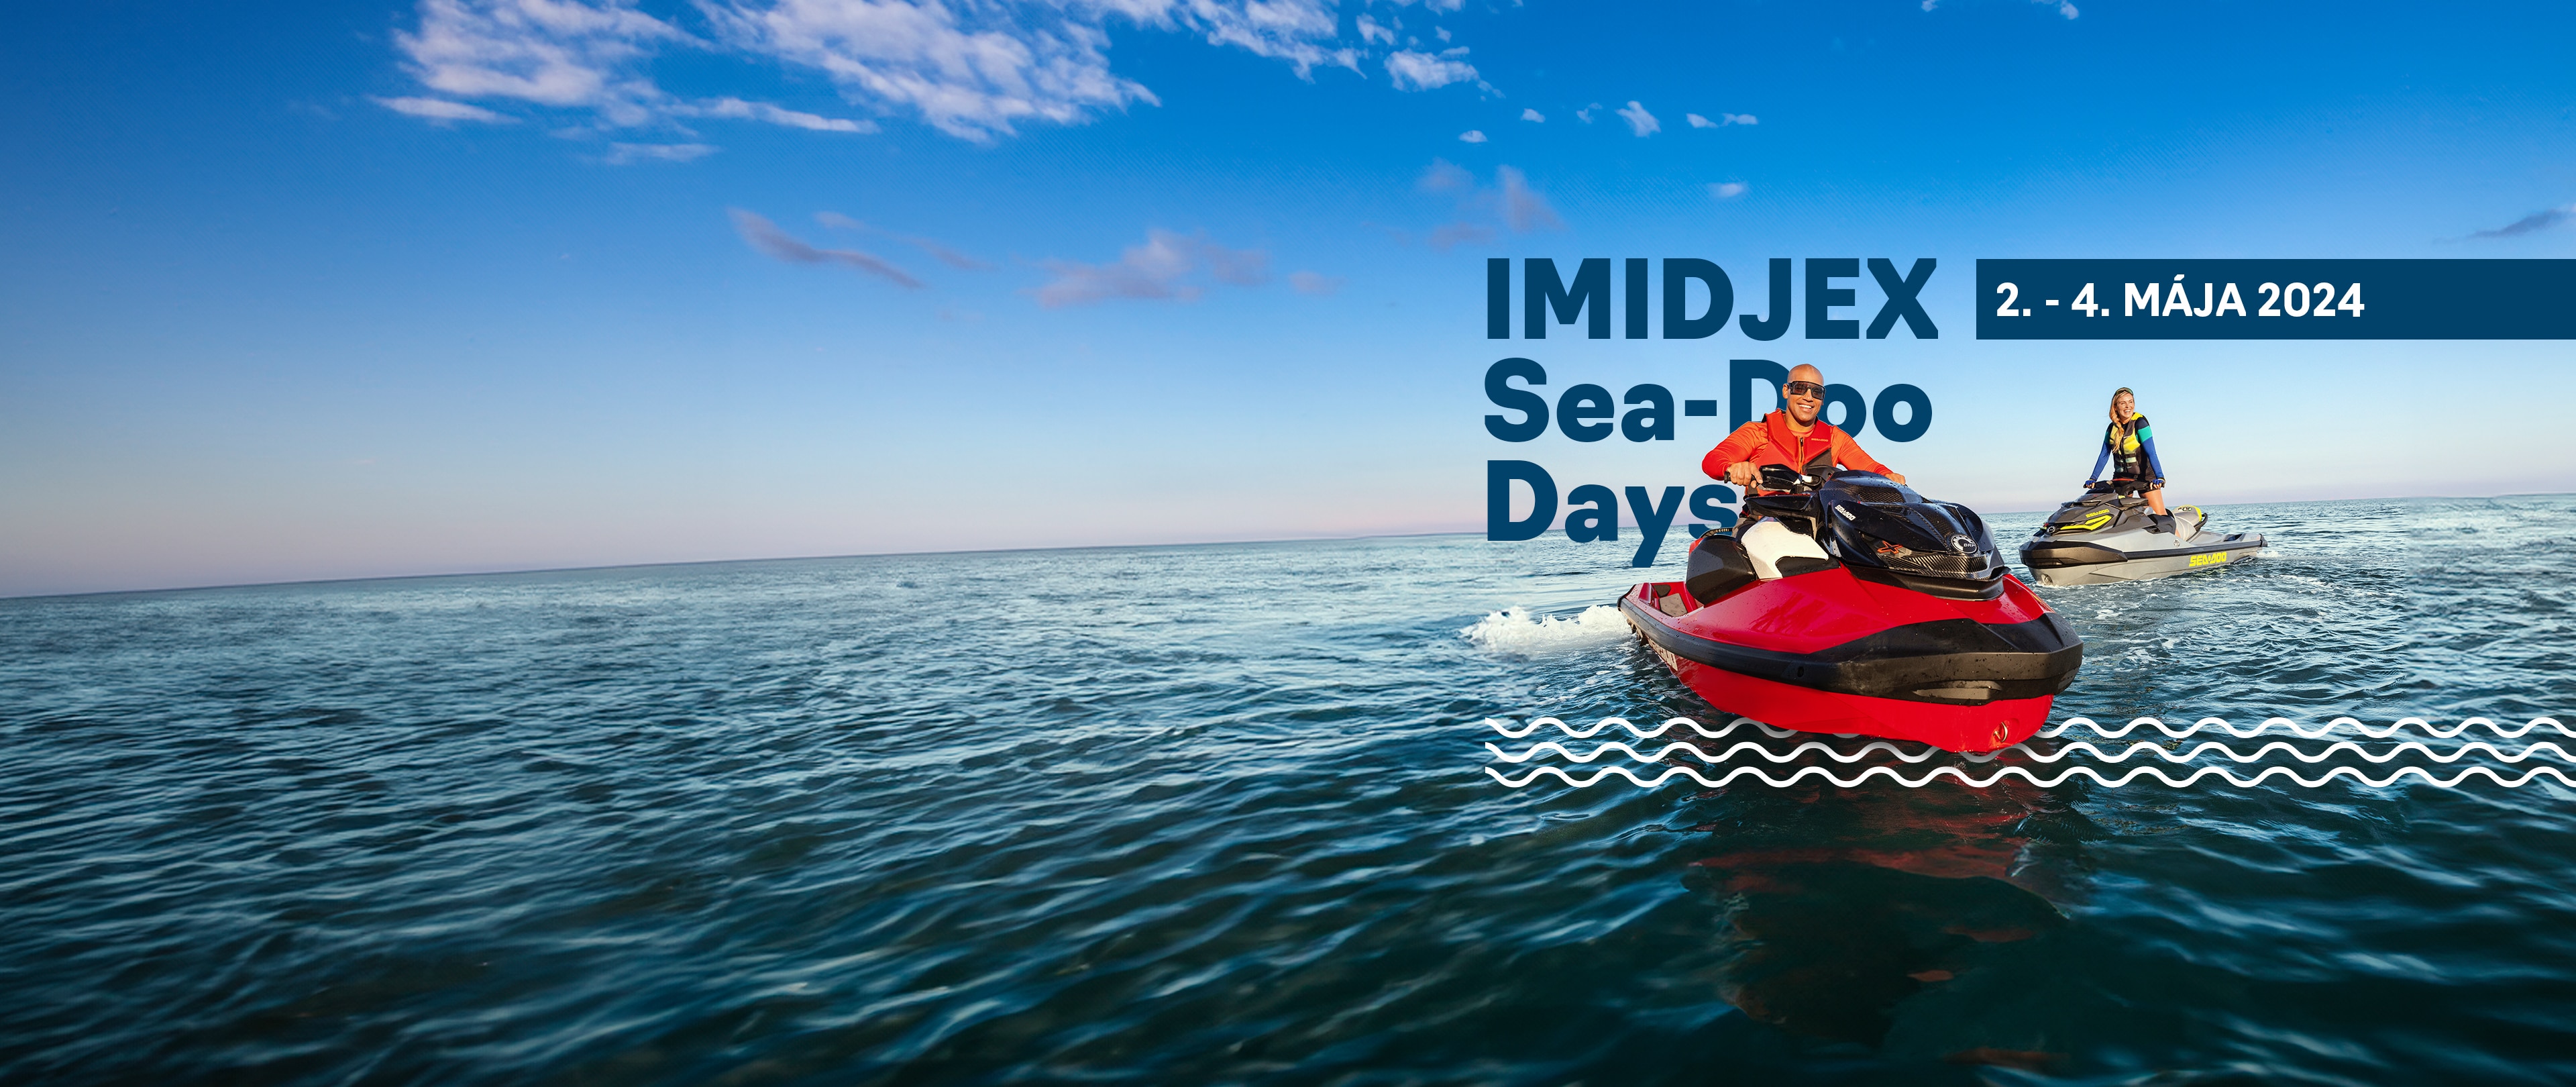 Imidjex Sea-Doo Days 2/2